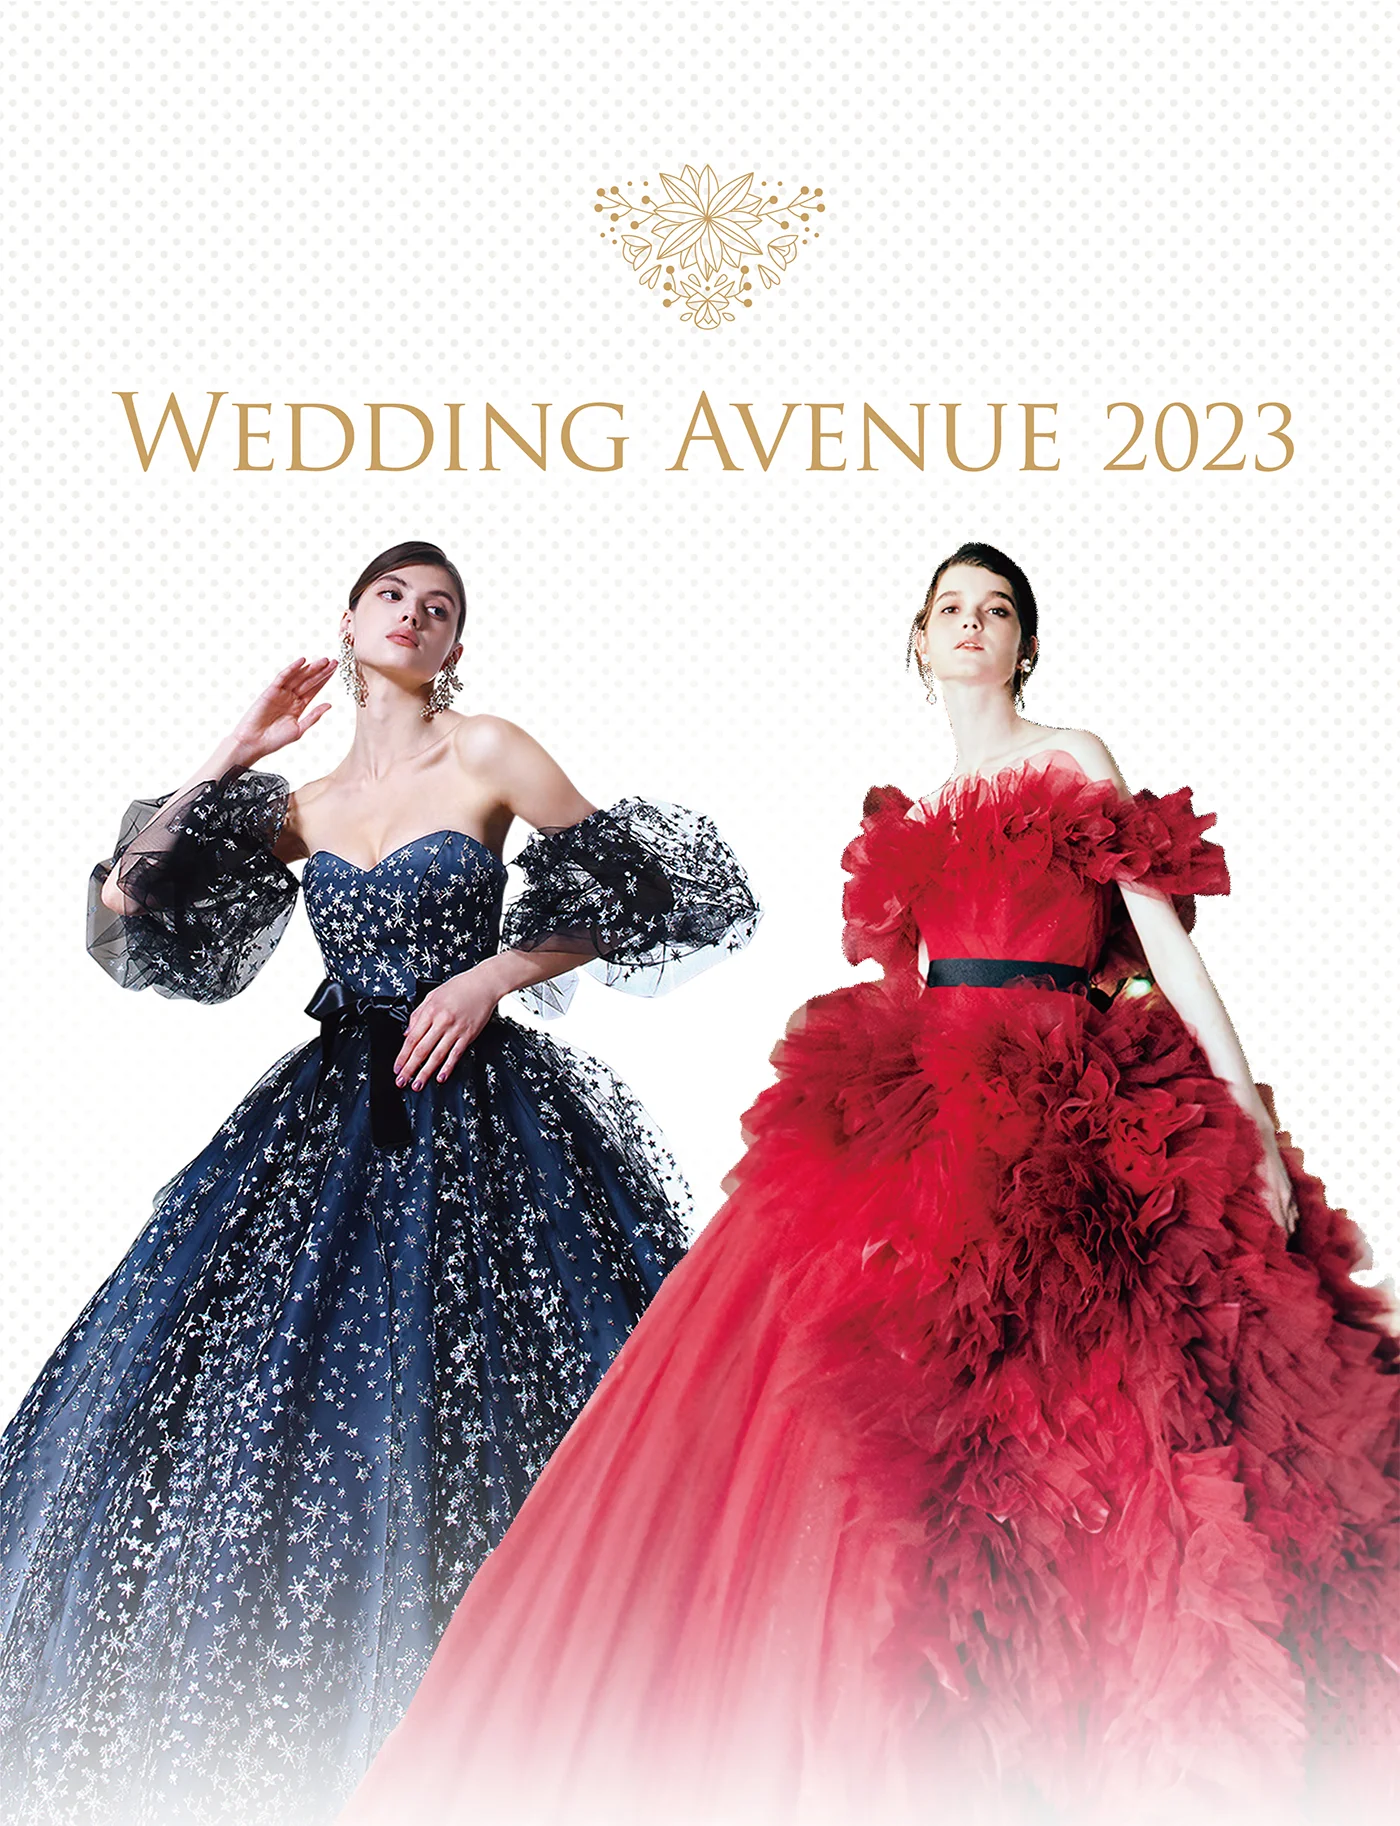 Wedding Avenue 2023